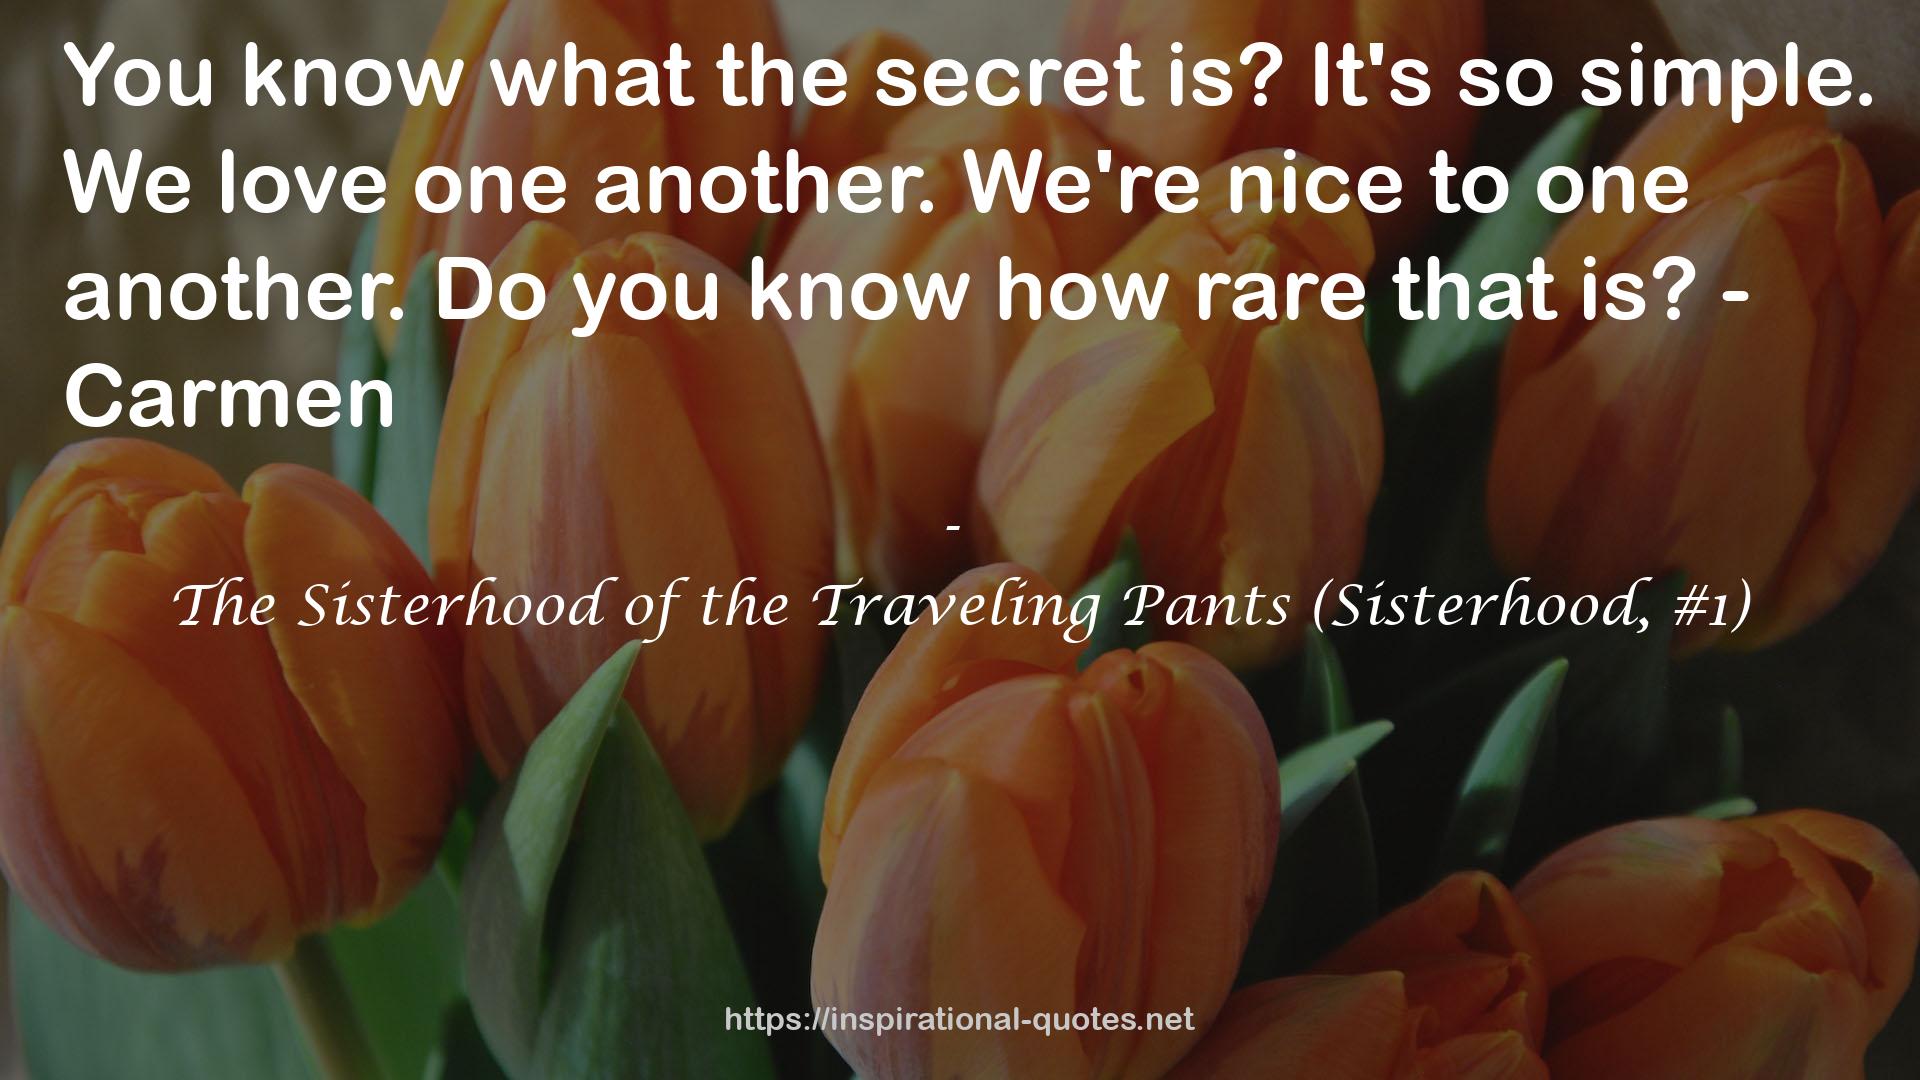 The Sisterhood of the Traveling Pants (Sisterhood, #1) QUOTES